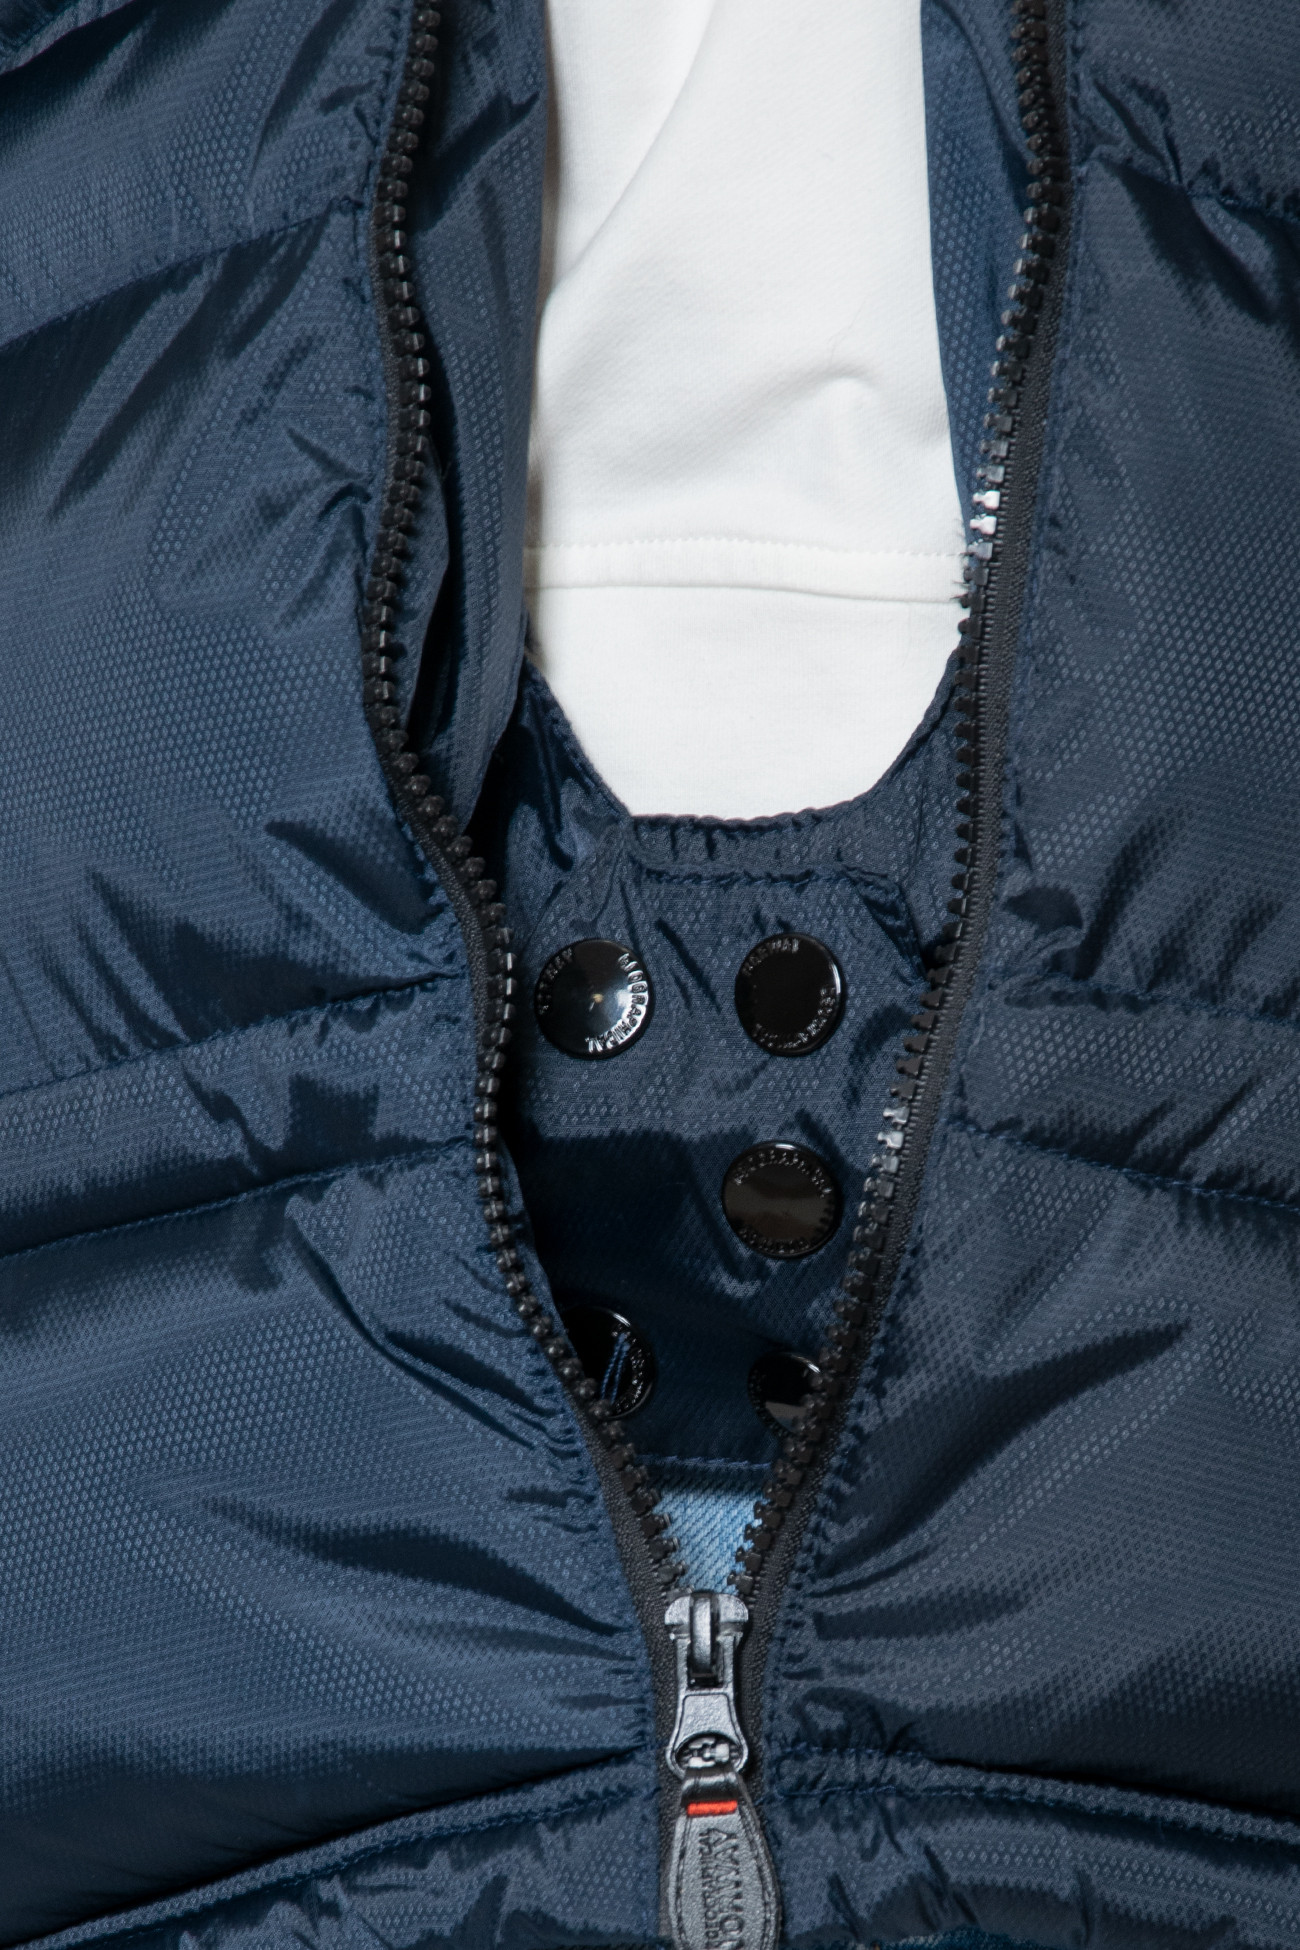 Куртка женская Geographical Norway синяя WQ622F-450